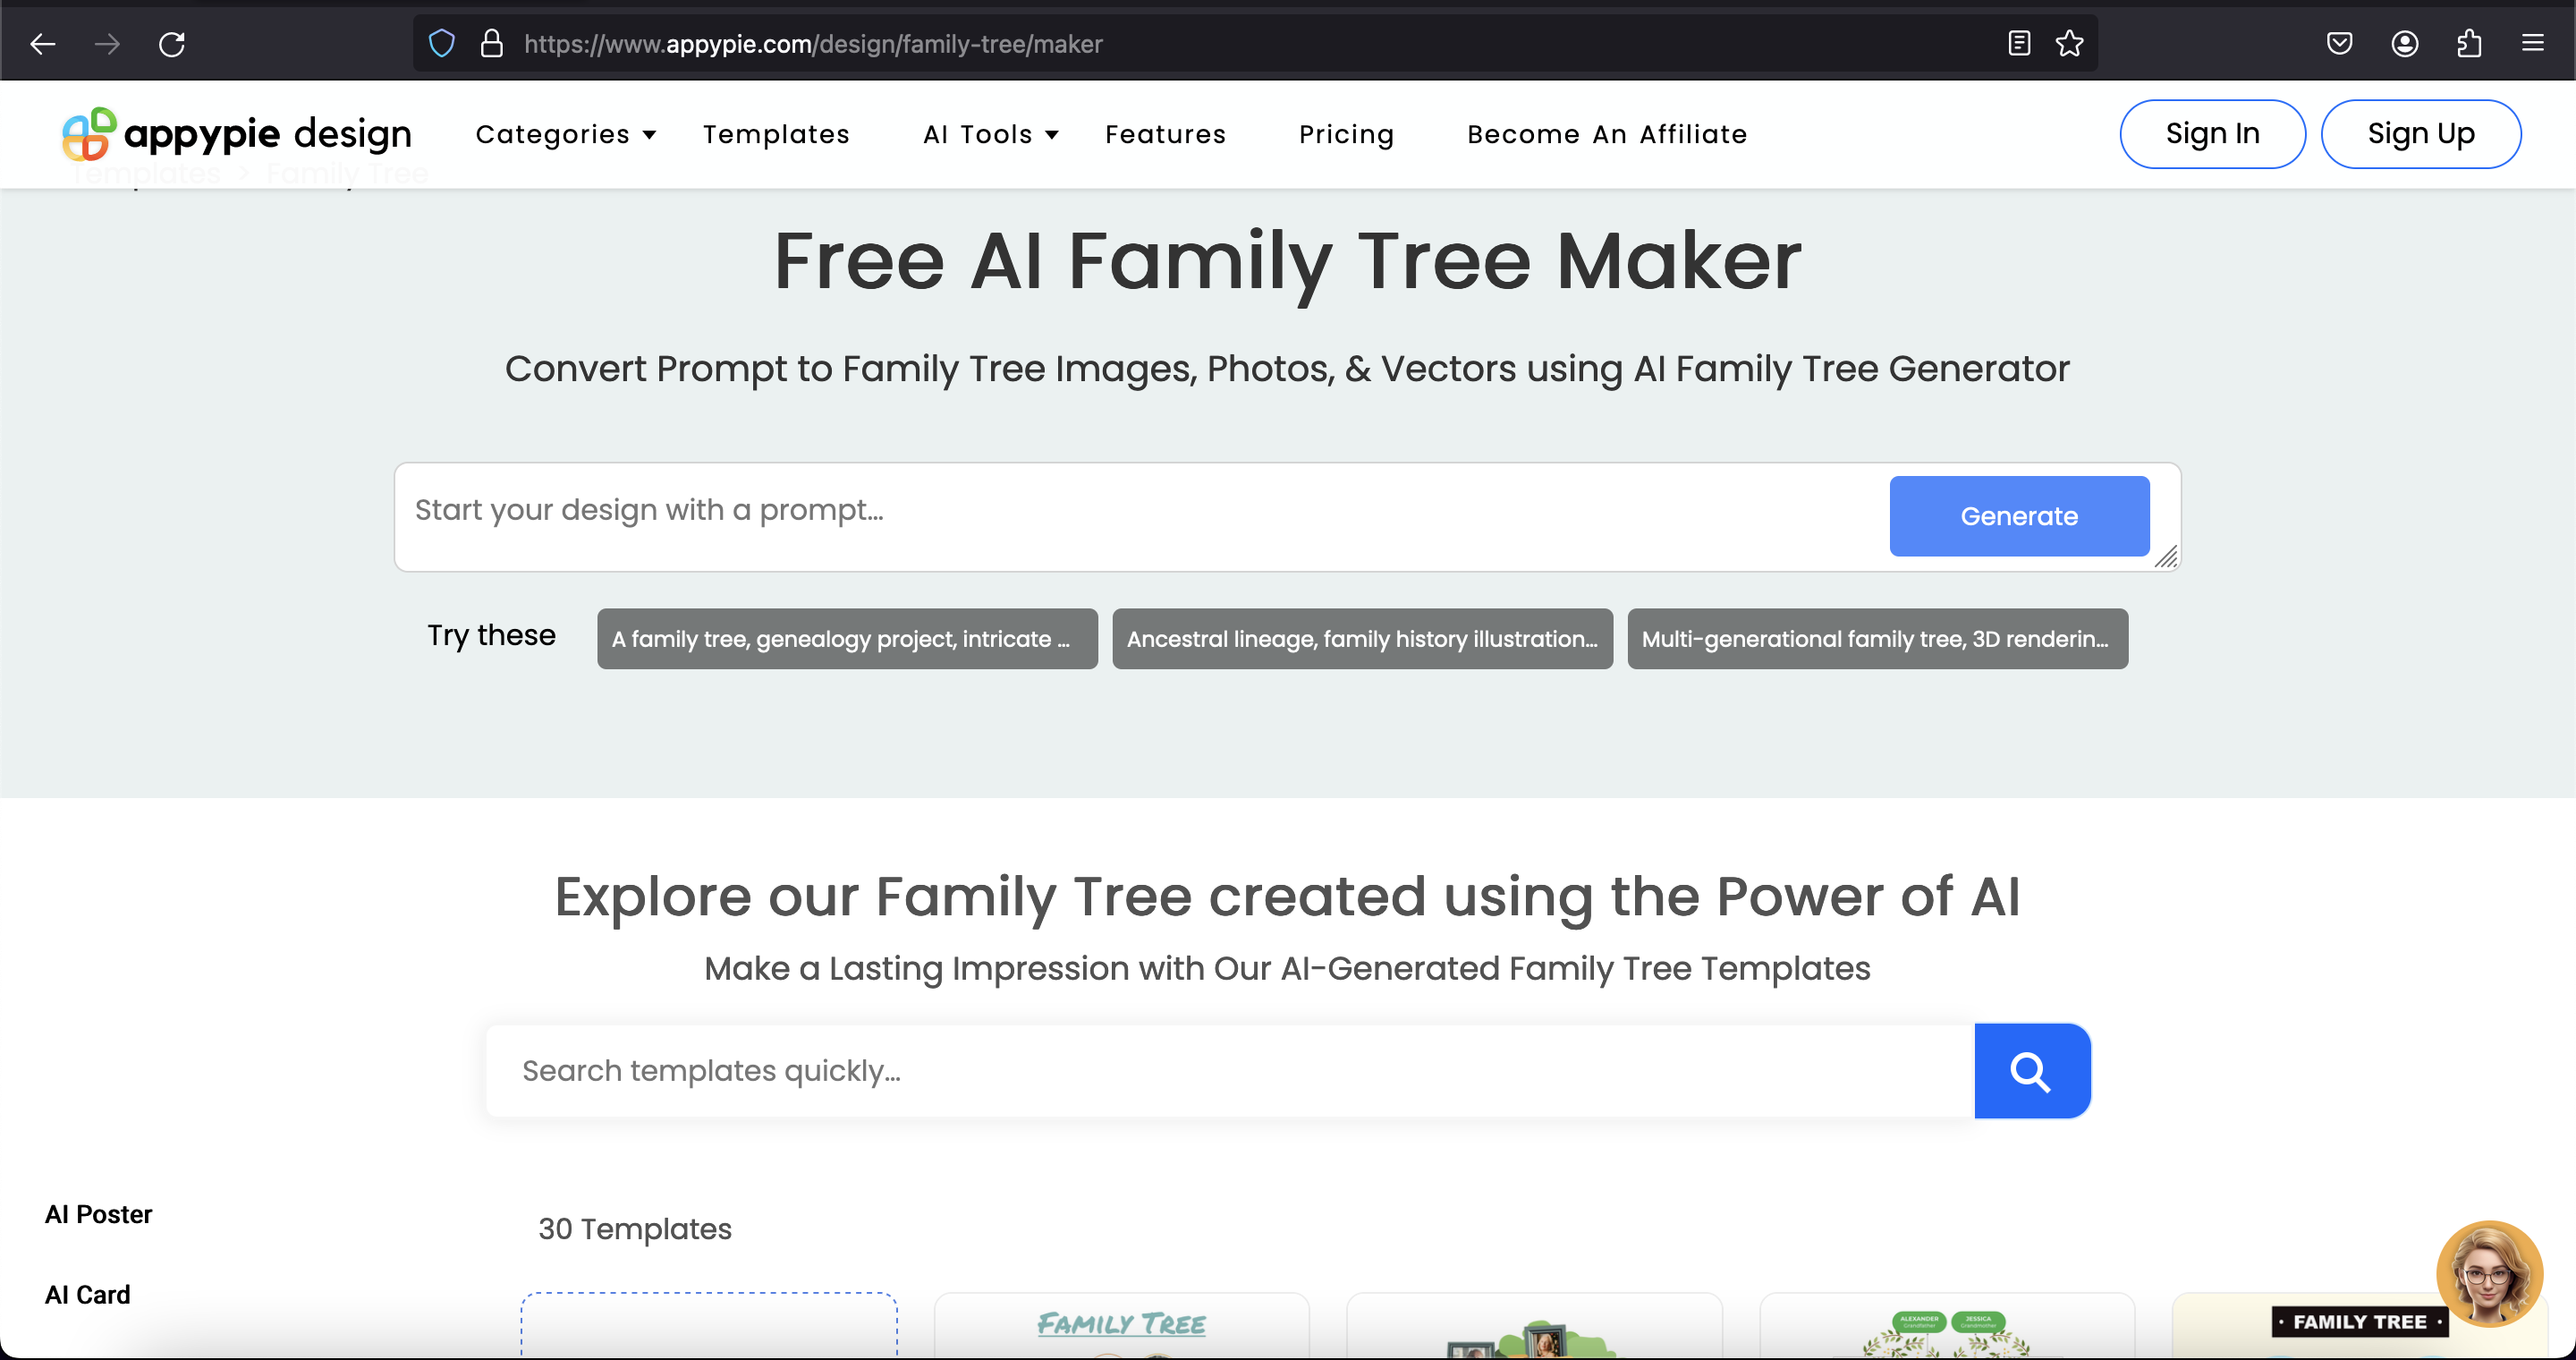 Appy Pie's AI Family Tree Maker